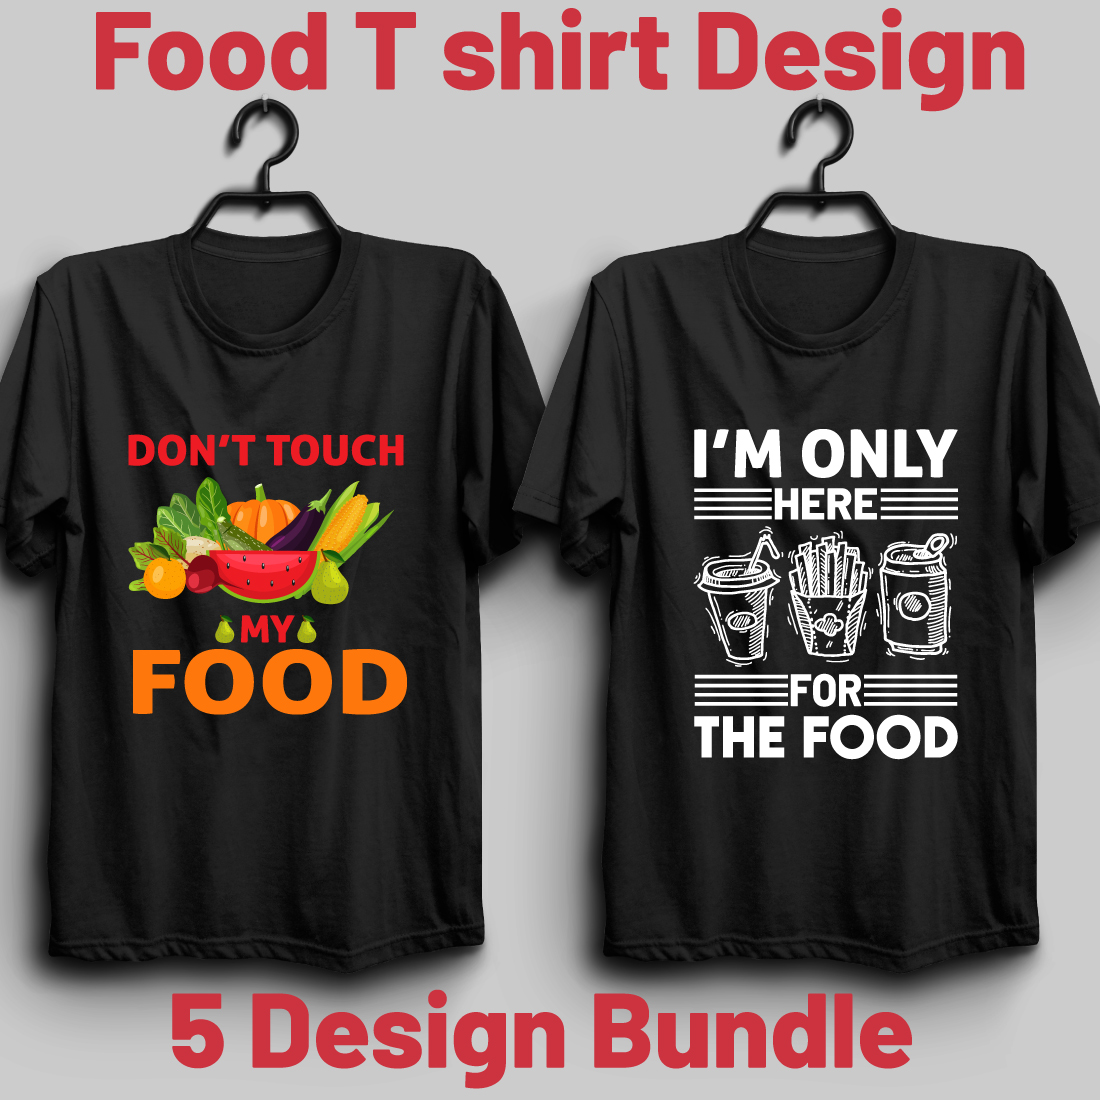 Food T shirt Design Bundle cover image.